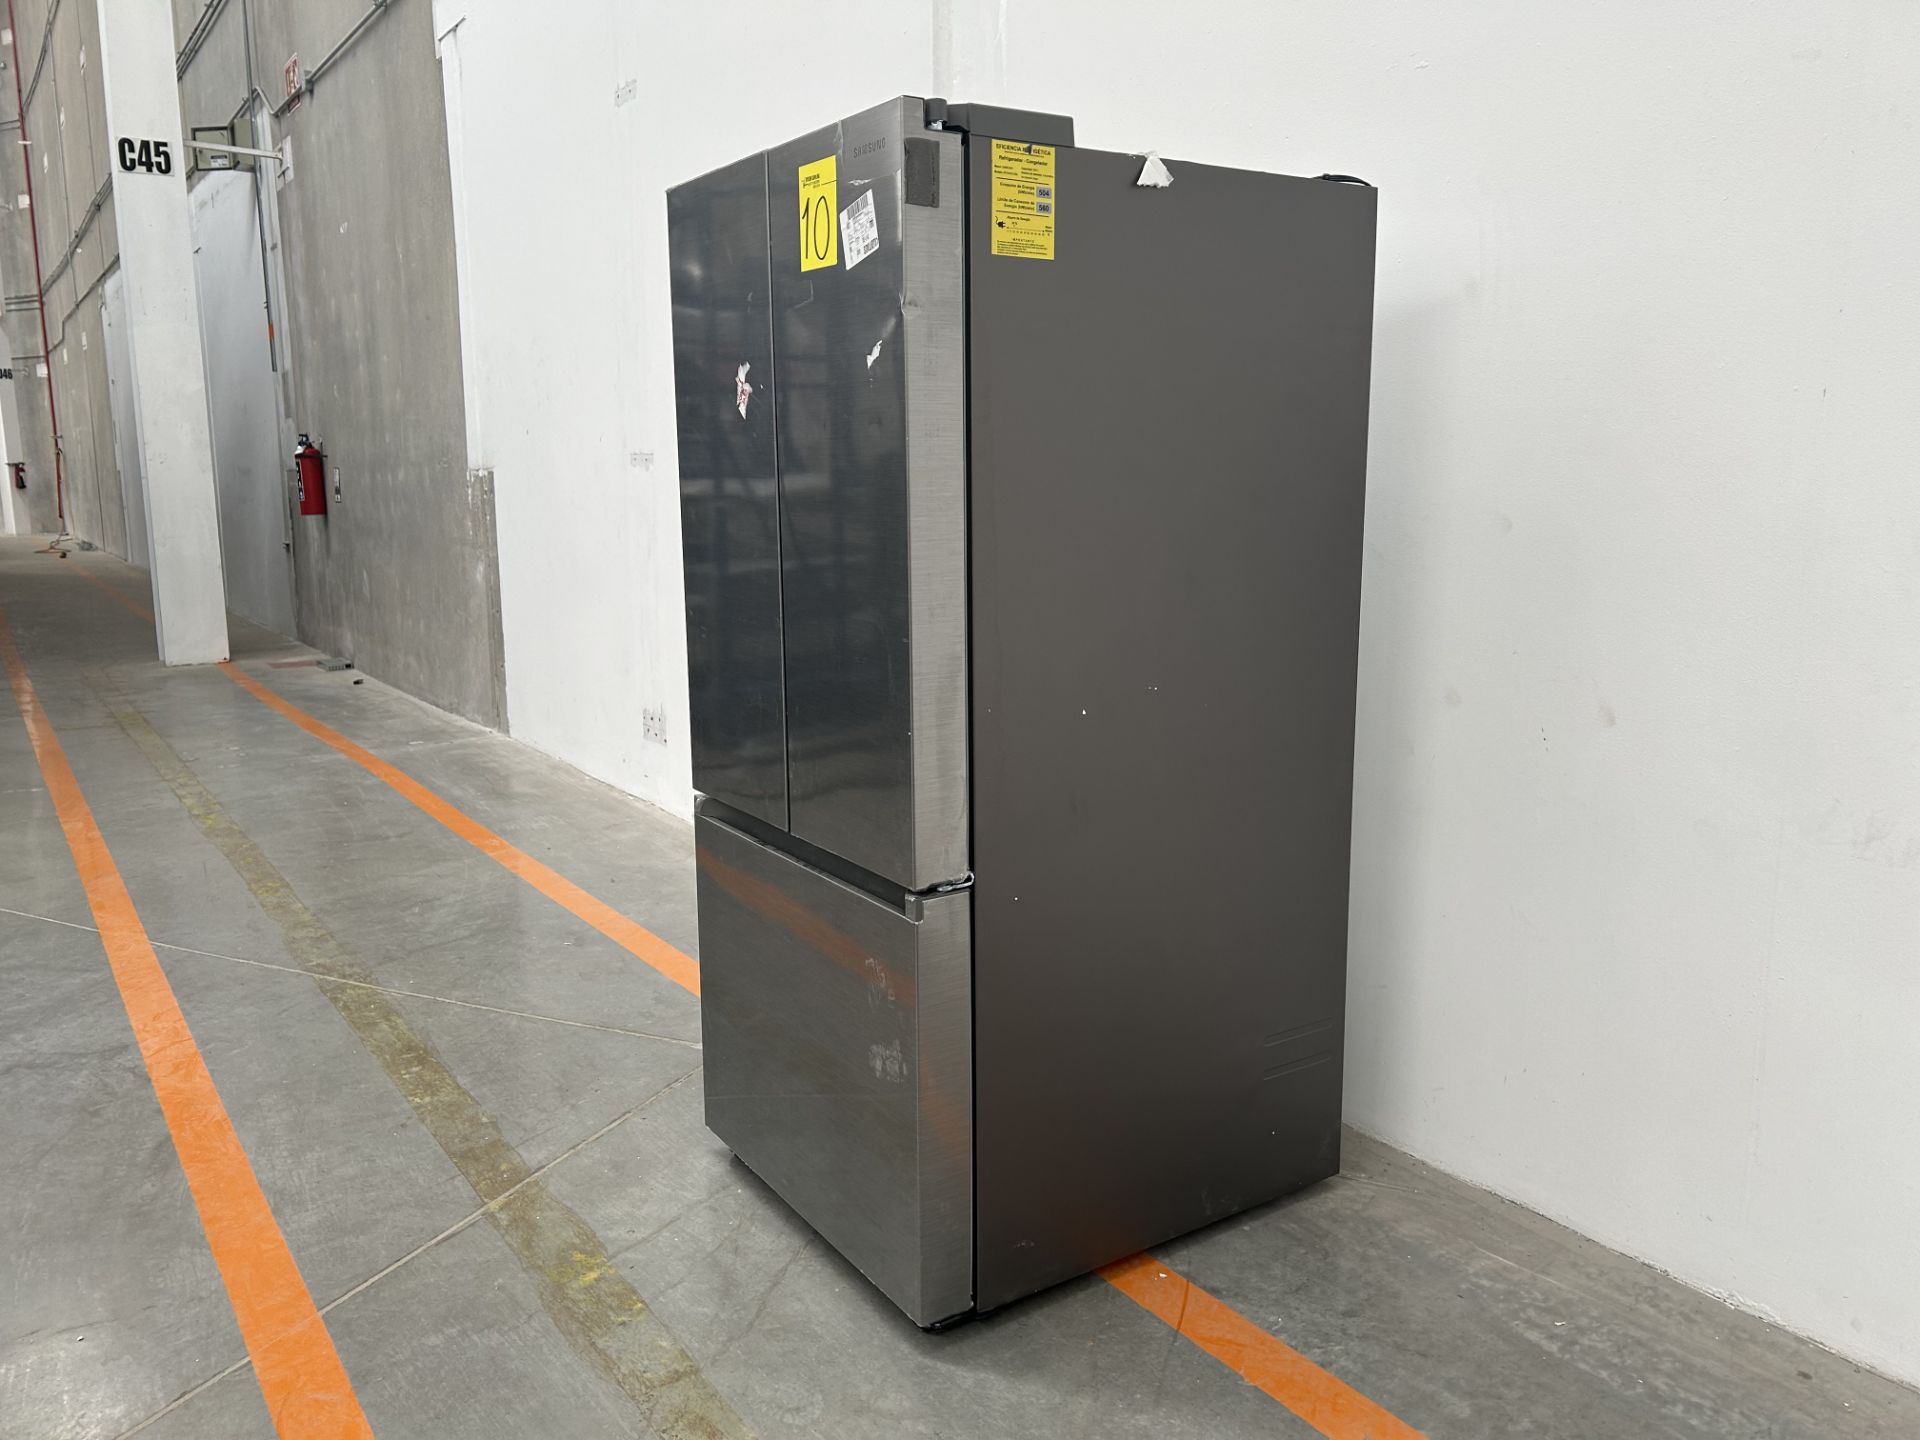 (NUEVO) Refrigerador Marca SAMSUNG, Modelo RF22A4010S9, Serie 1844T, Color GRIS - Image 2 of 4